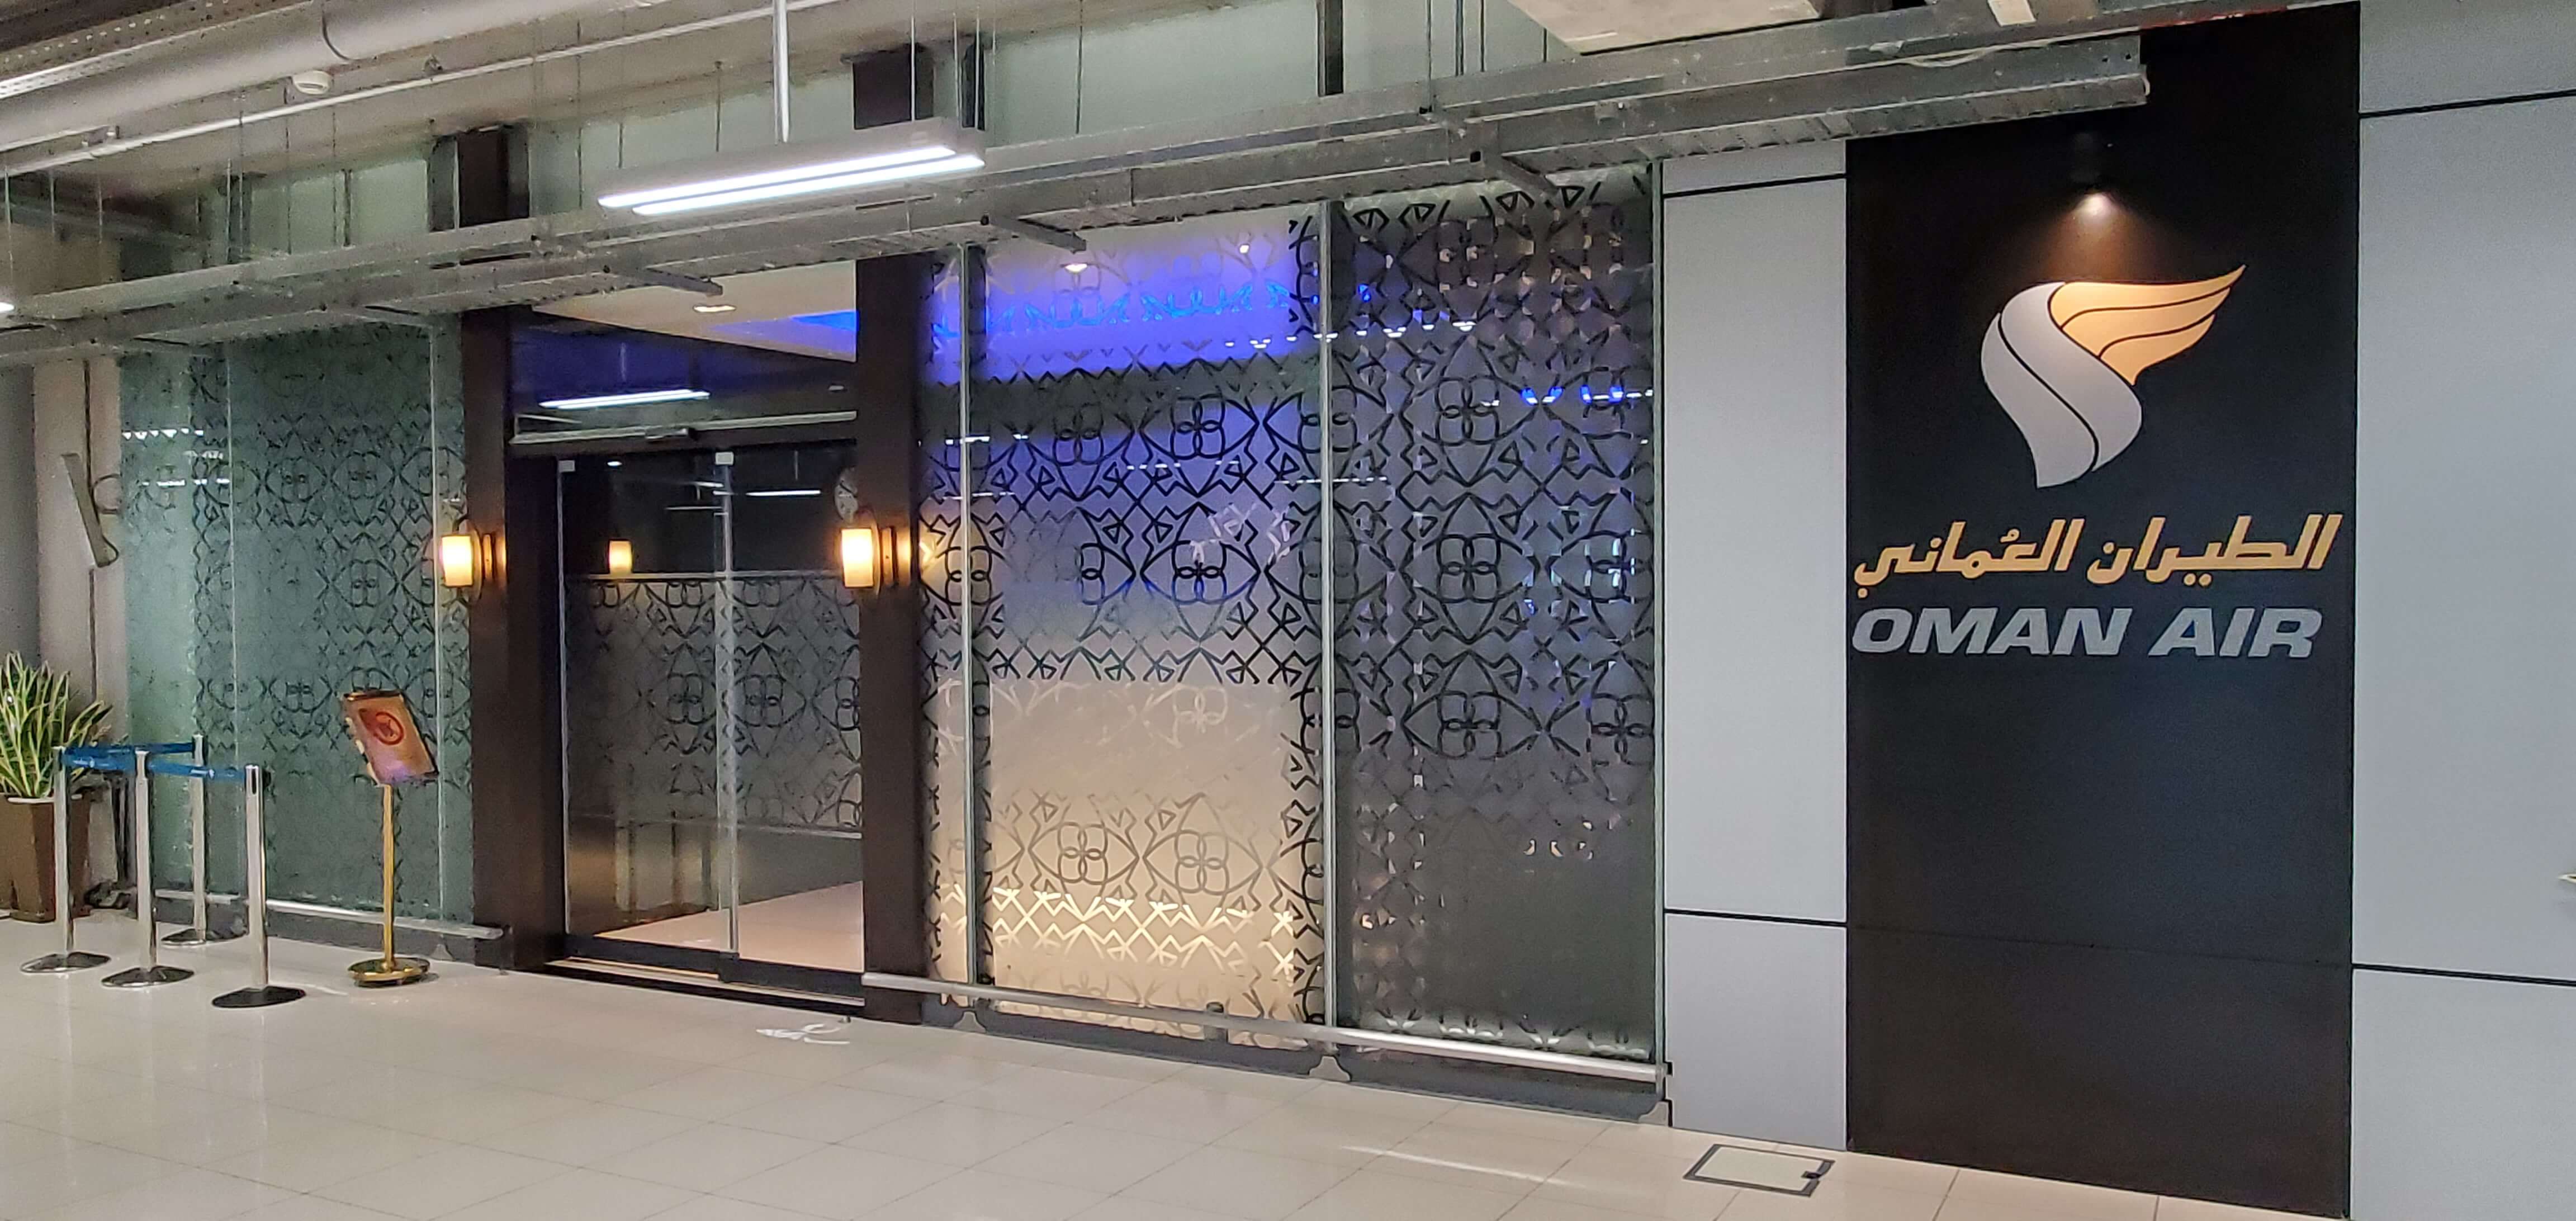 泰國曼谷機場 Suvarnabhumi Airport (BKK) Oman Air First and Business Class Lounge！HSBC Everymile信用卡、Priority Pass都可以免費入！